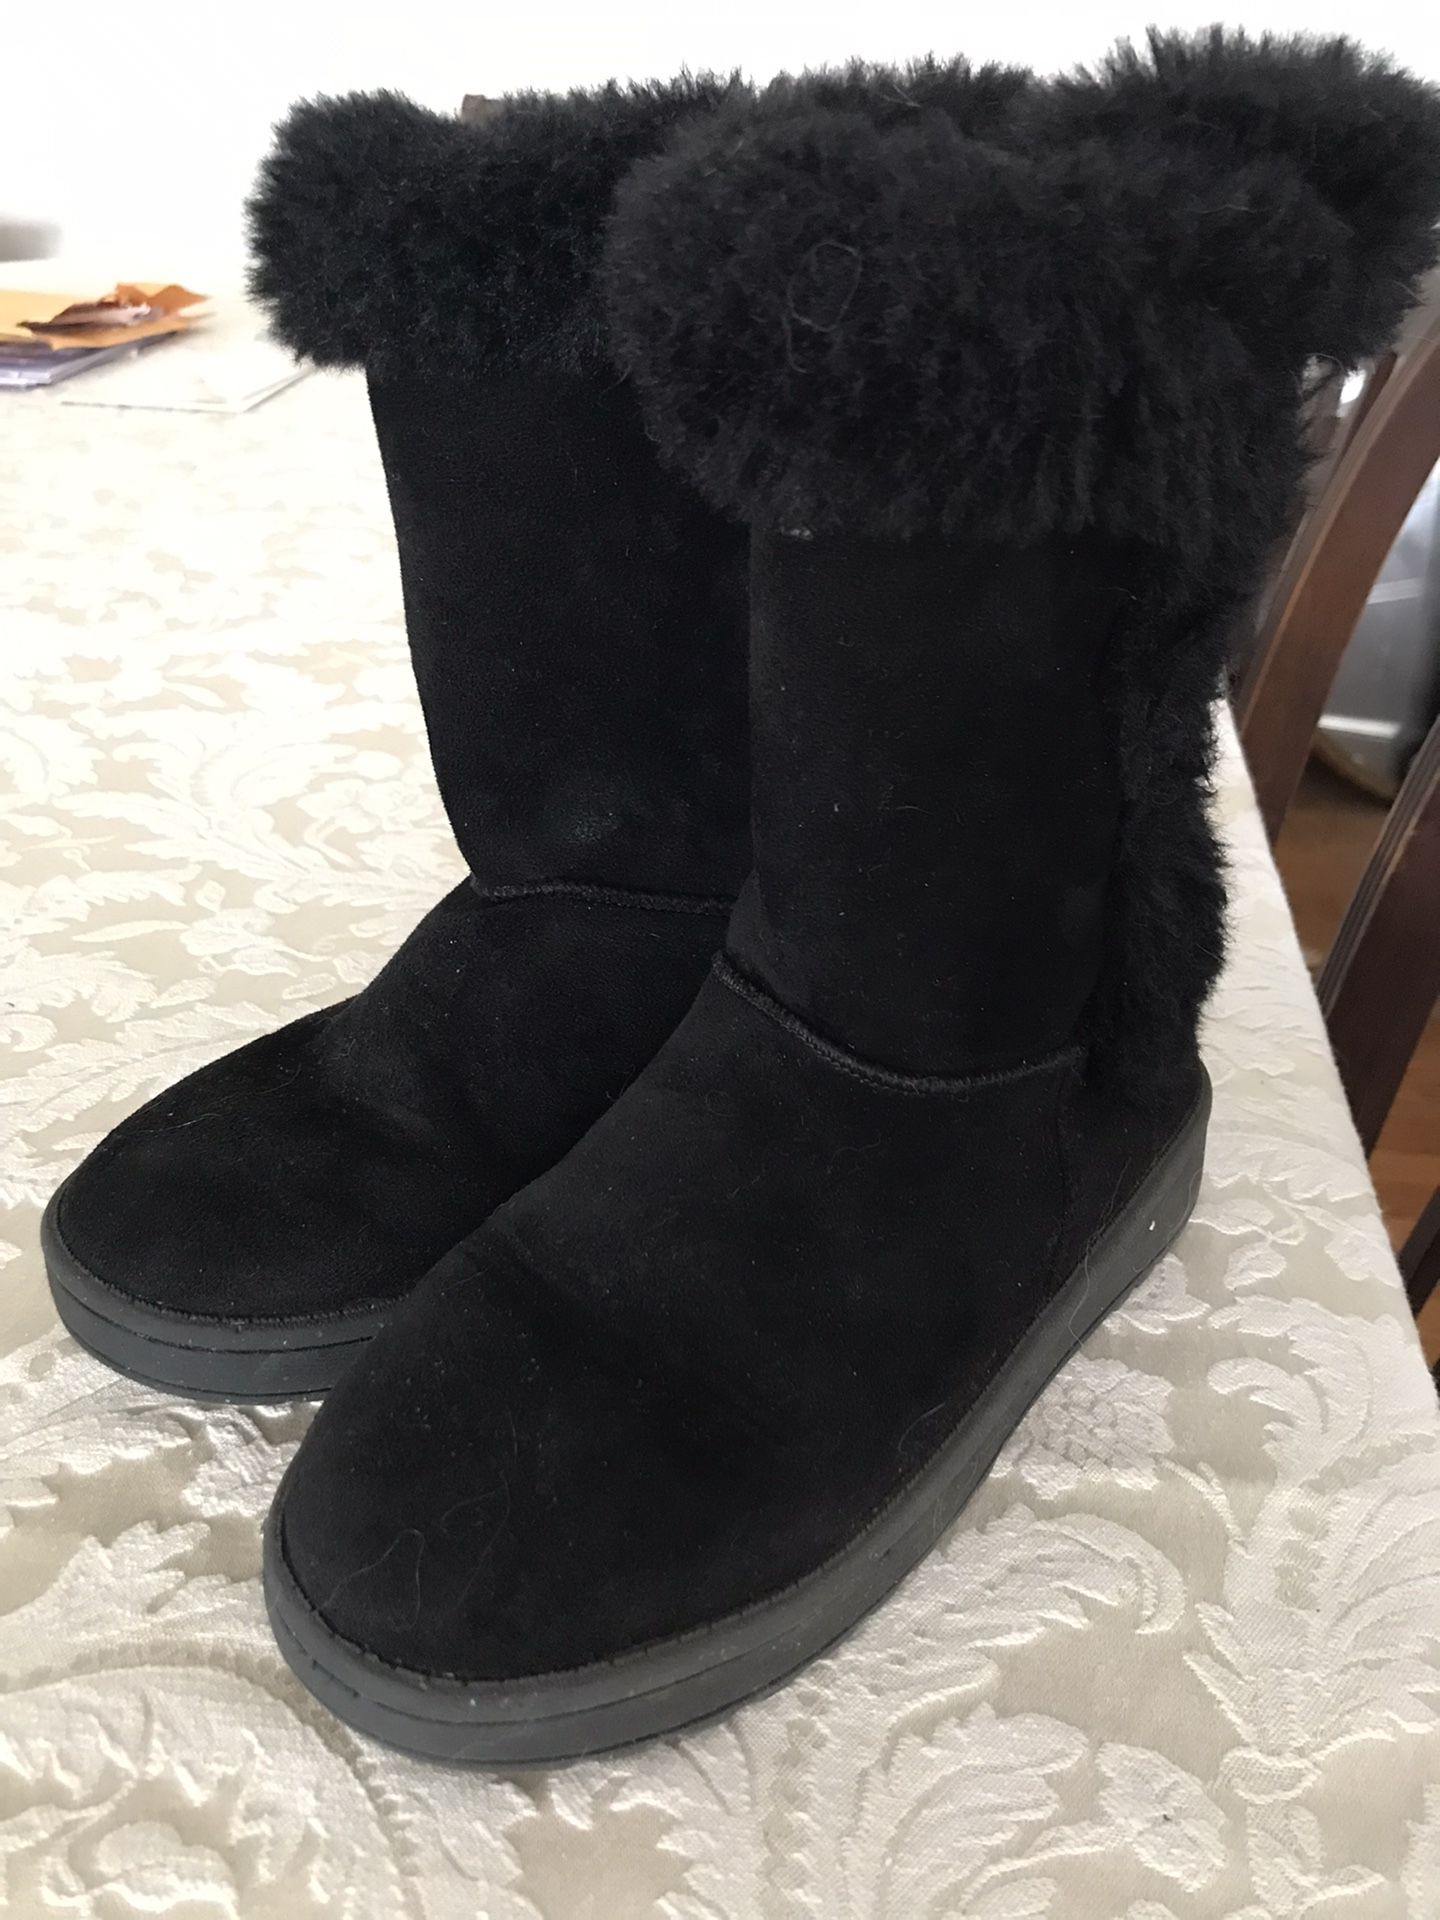 Girls Black Ugg Style Boots  Size 2